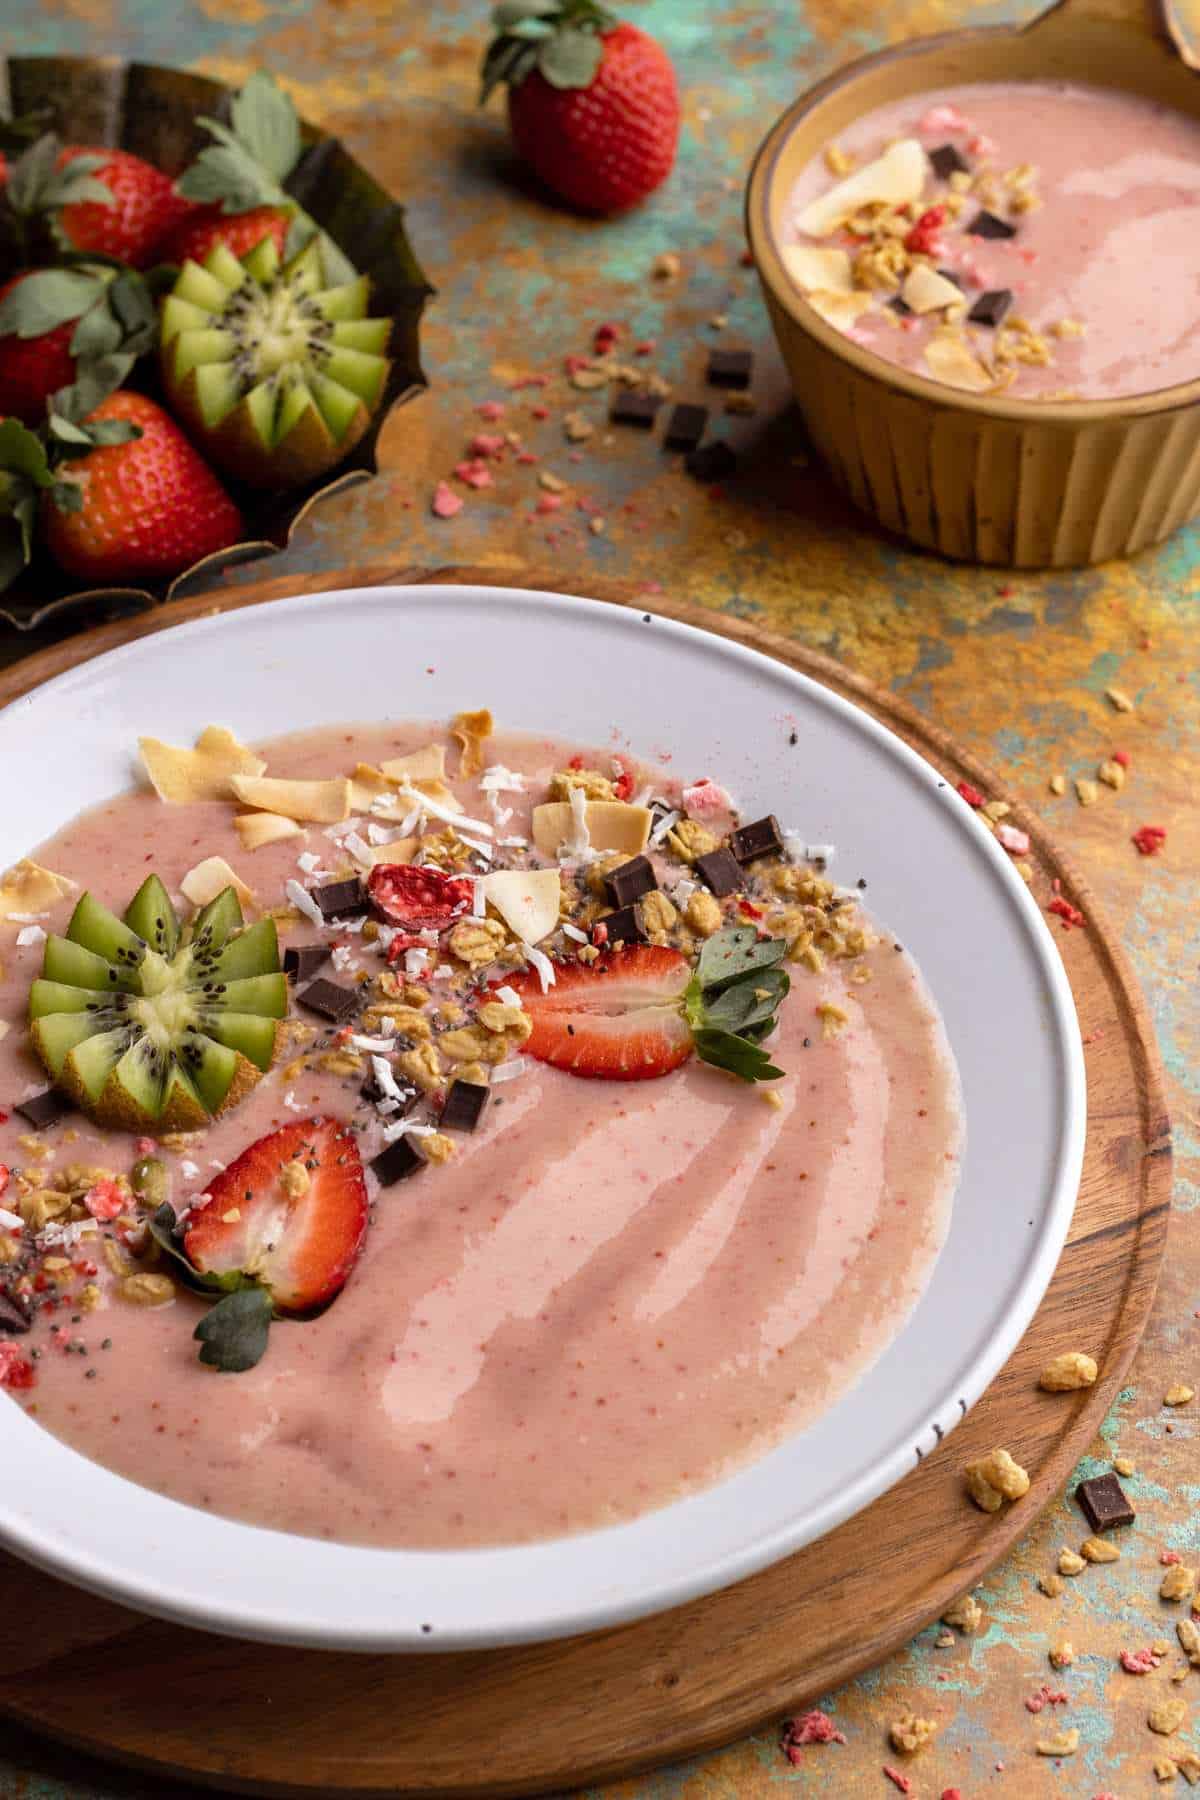 Strawberry smoothie bowl with kiwi fruit and granola.